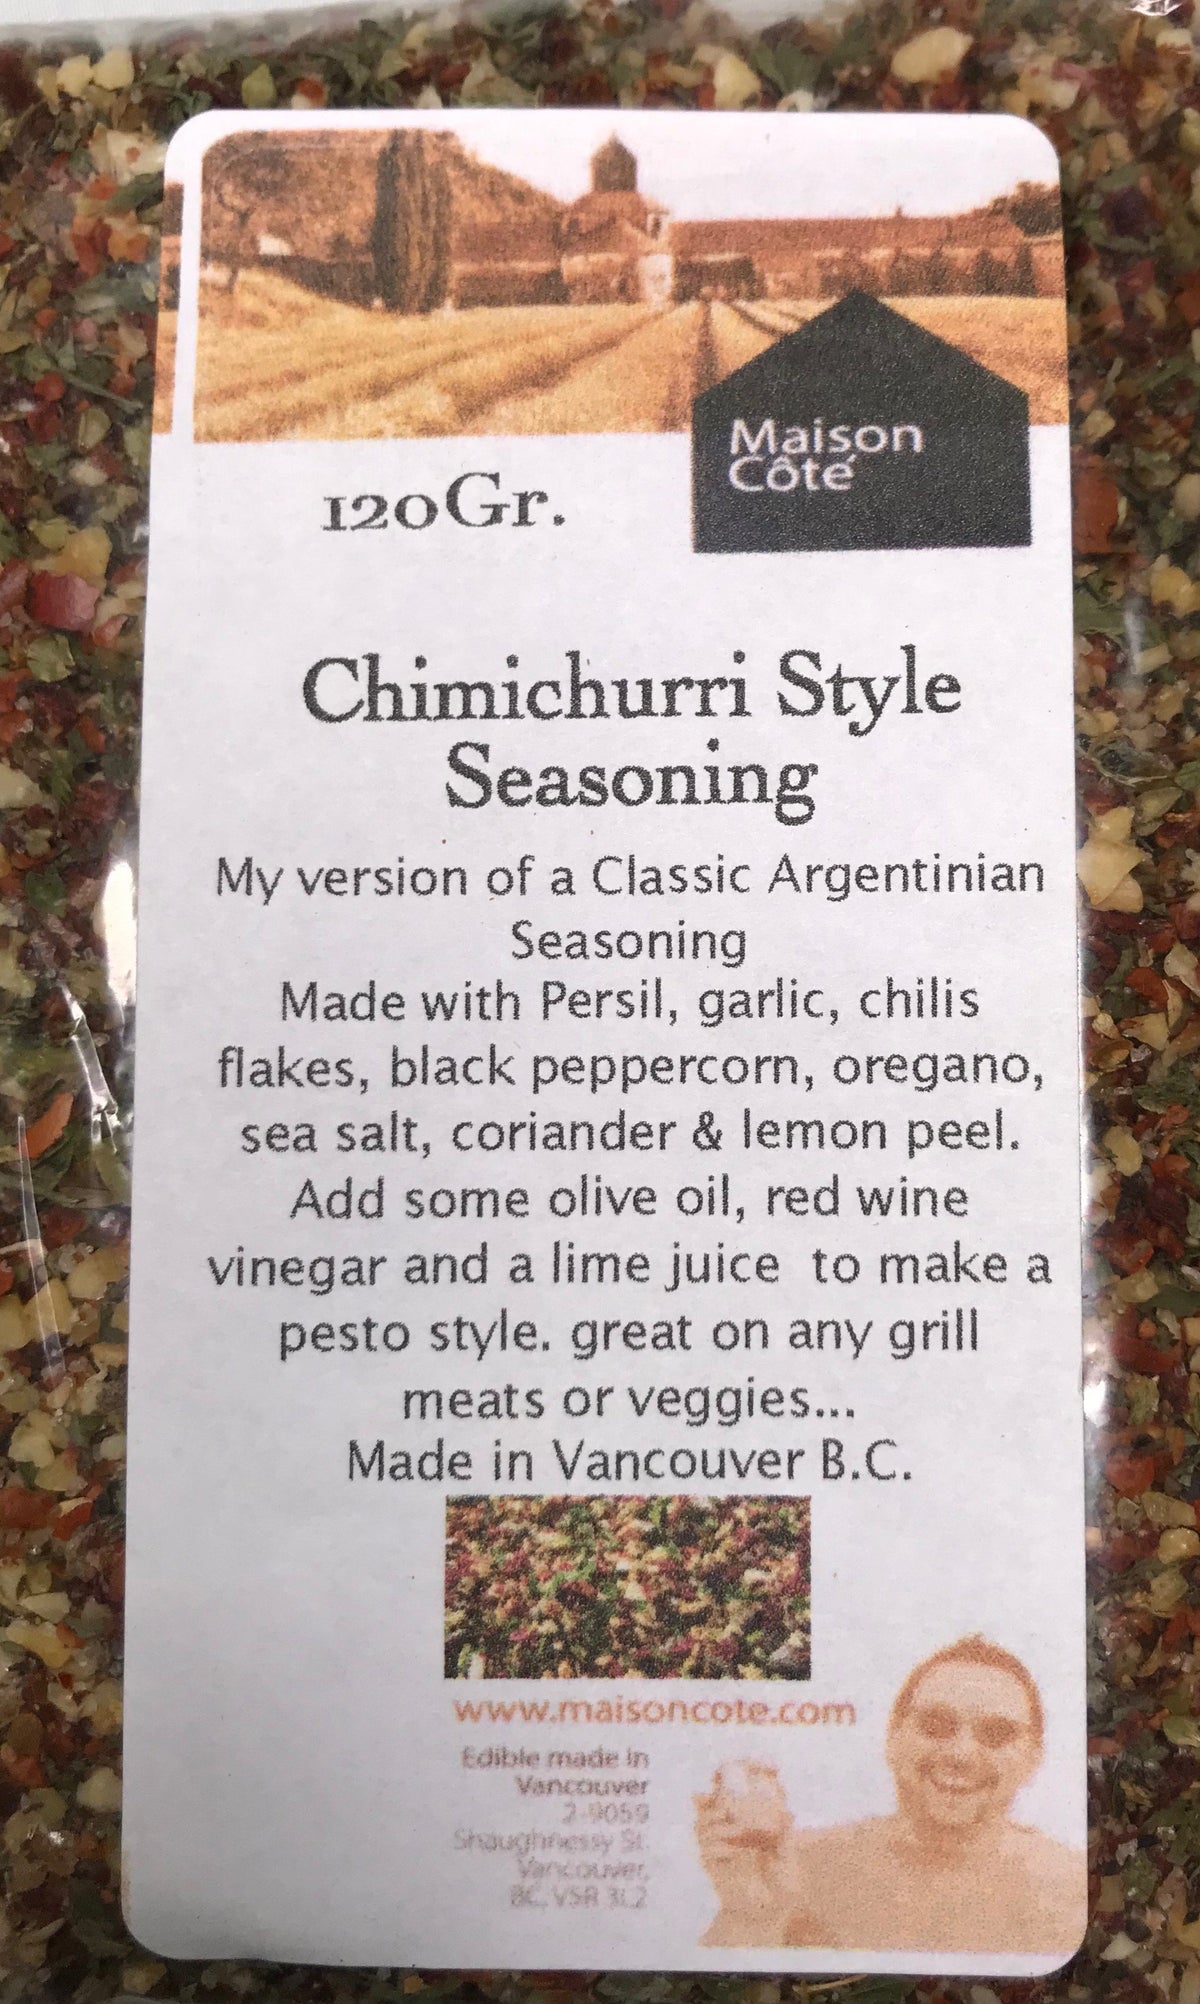 Chimichurri Style Seasoning